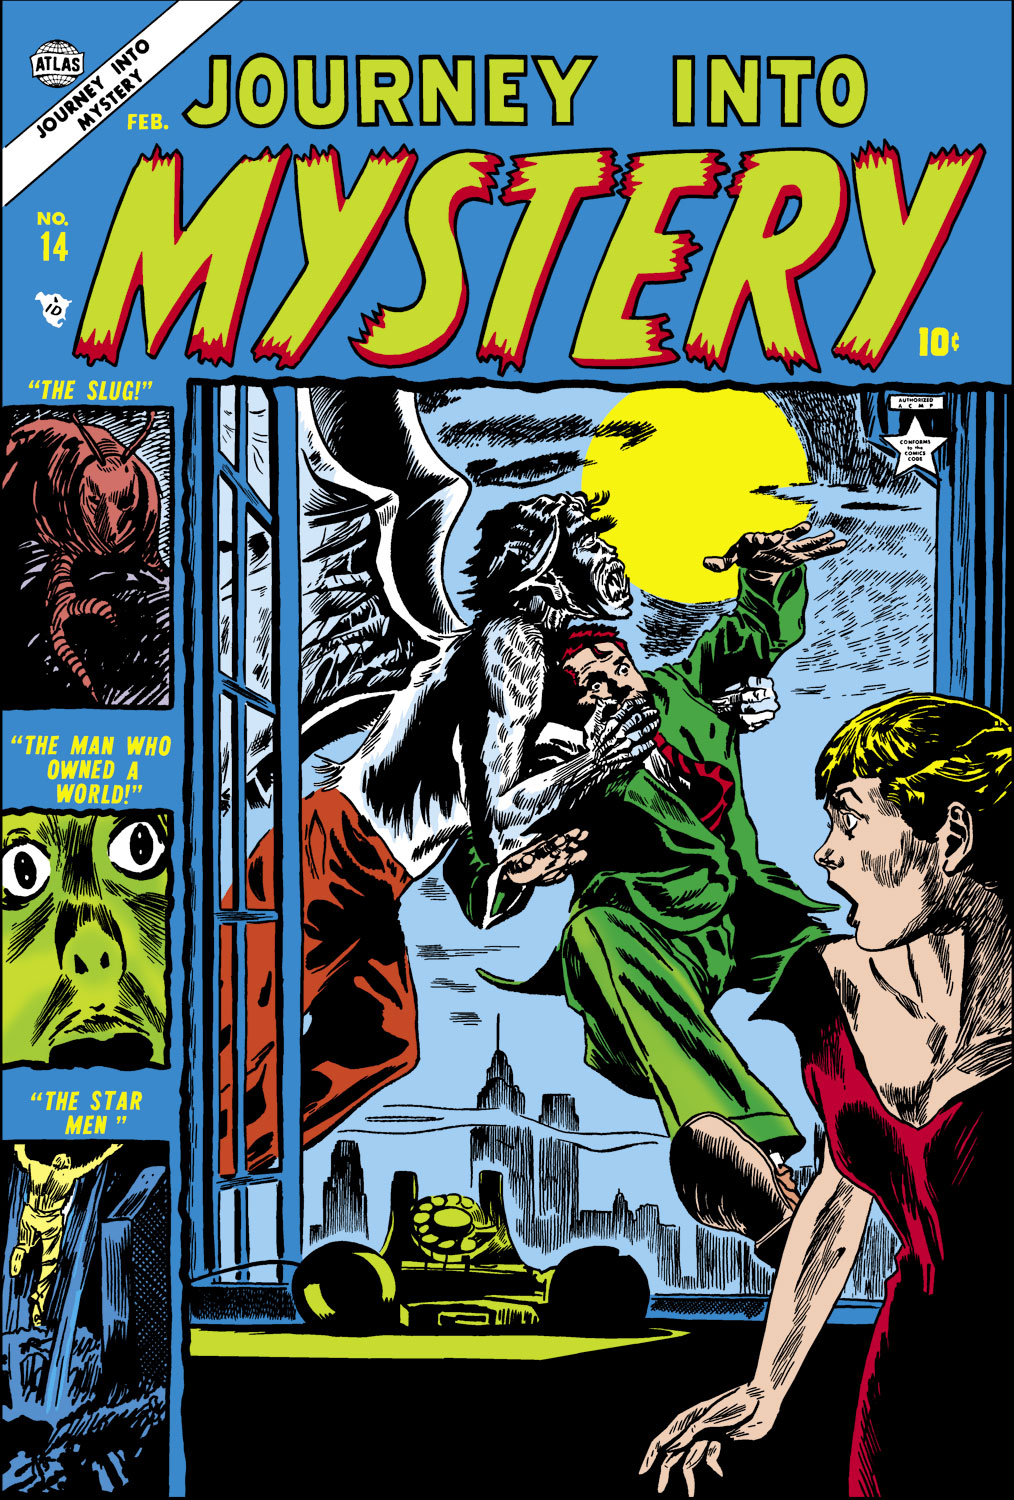 Journey Into Mystery (1952) #14